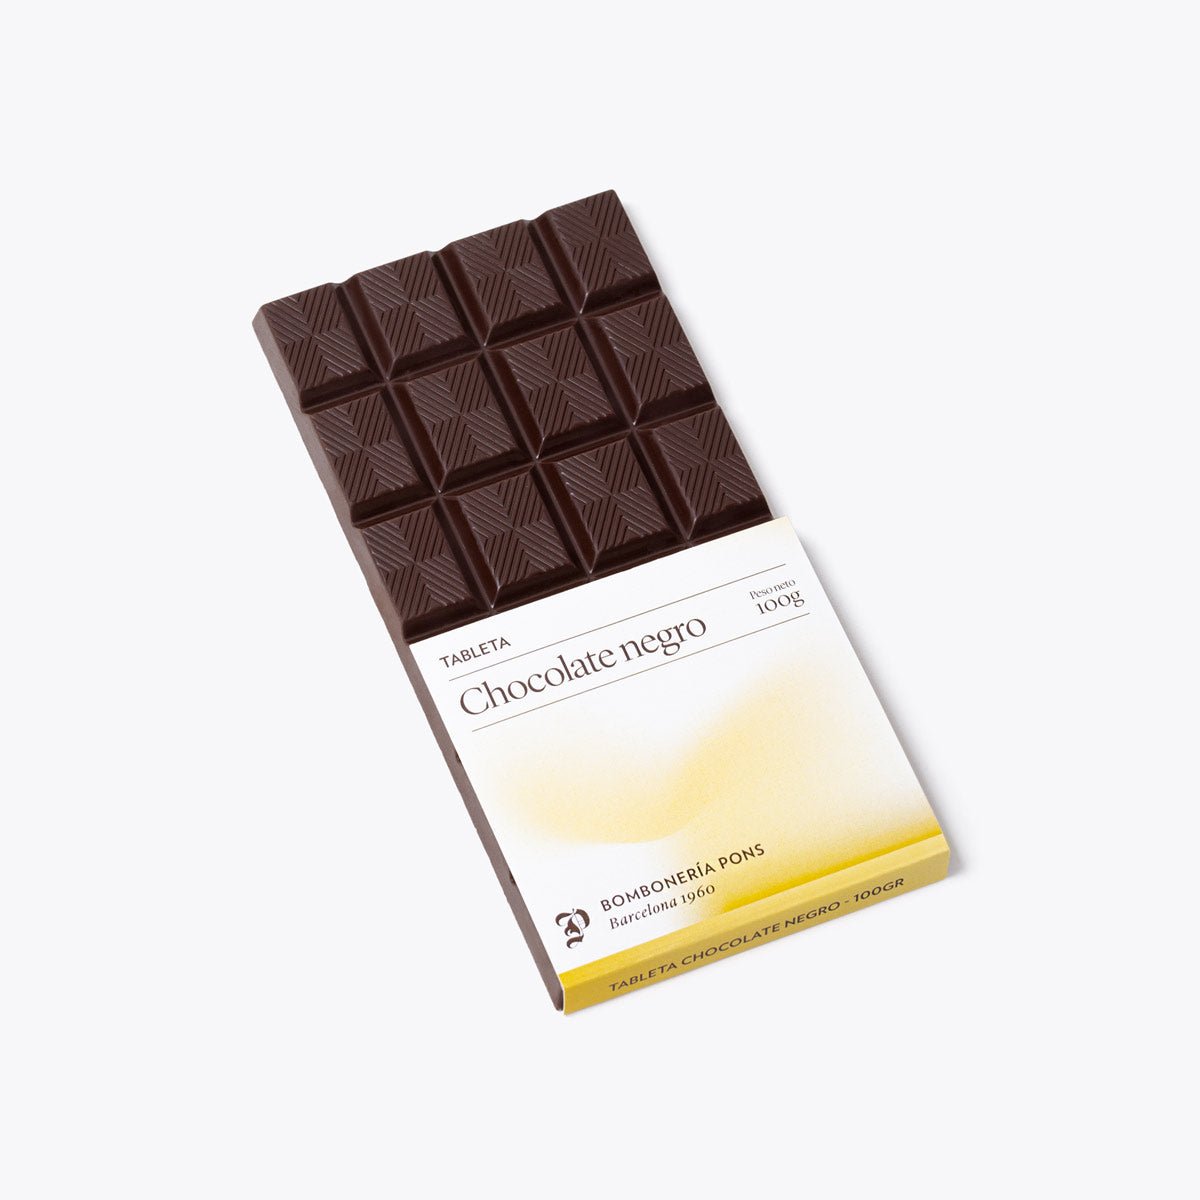 Tableta Chocolate Negro - 100g - Bombonería Pons - Tabletas Clásicas